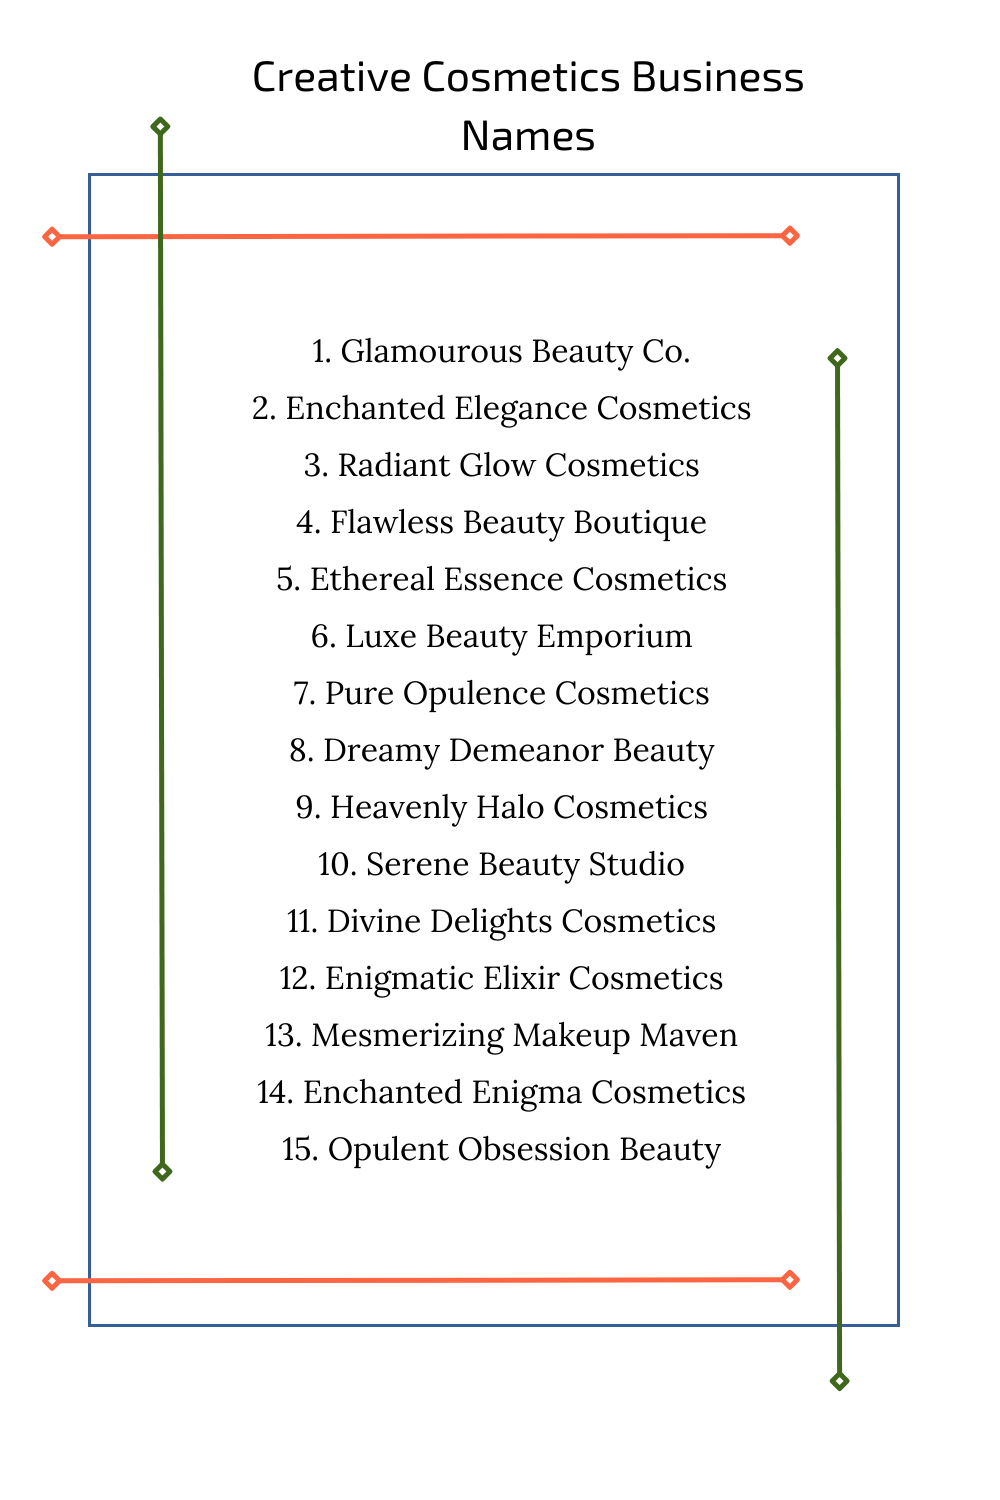 Creative Cosmetics Business Names